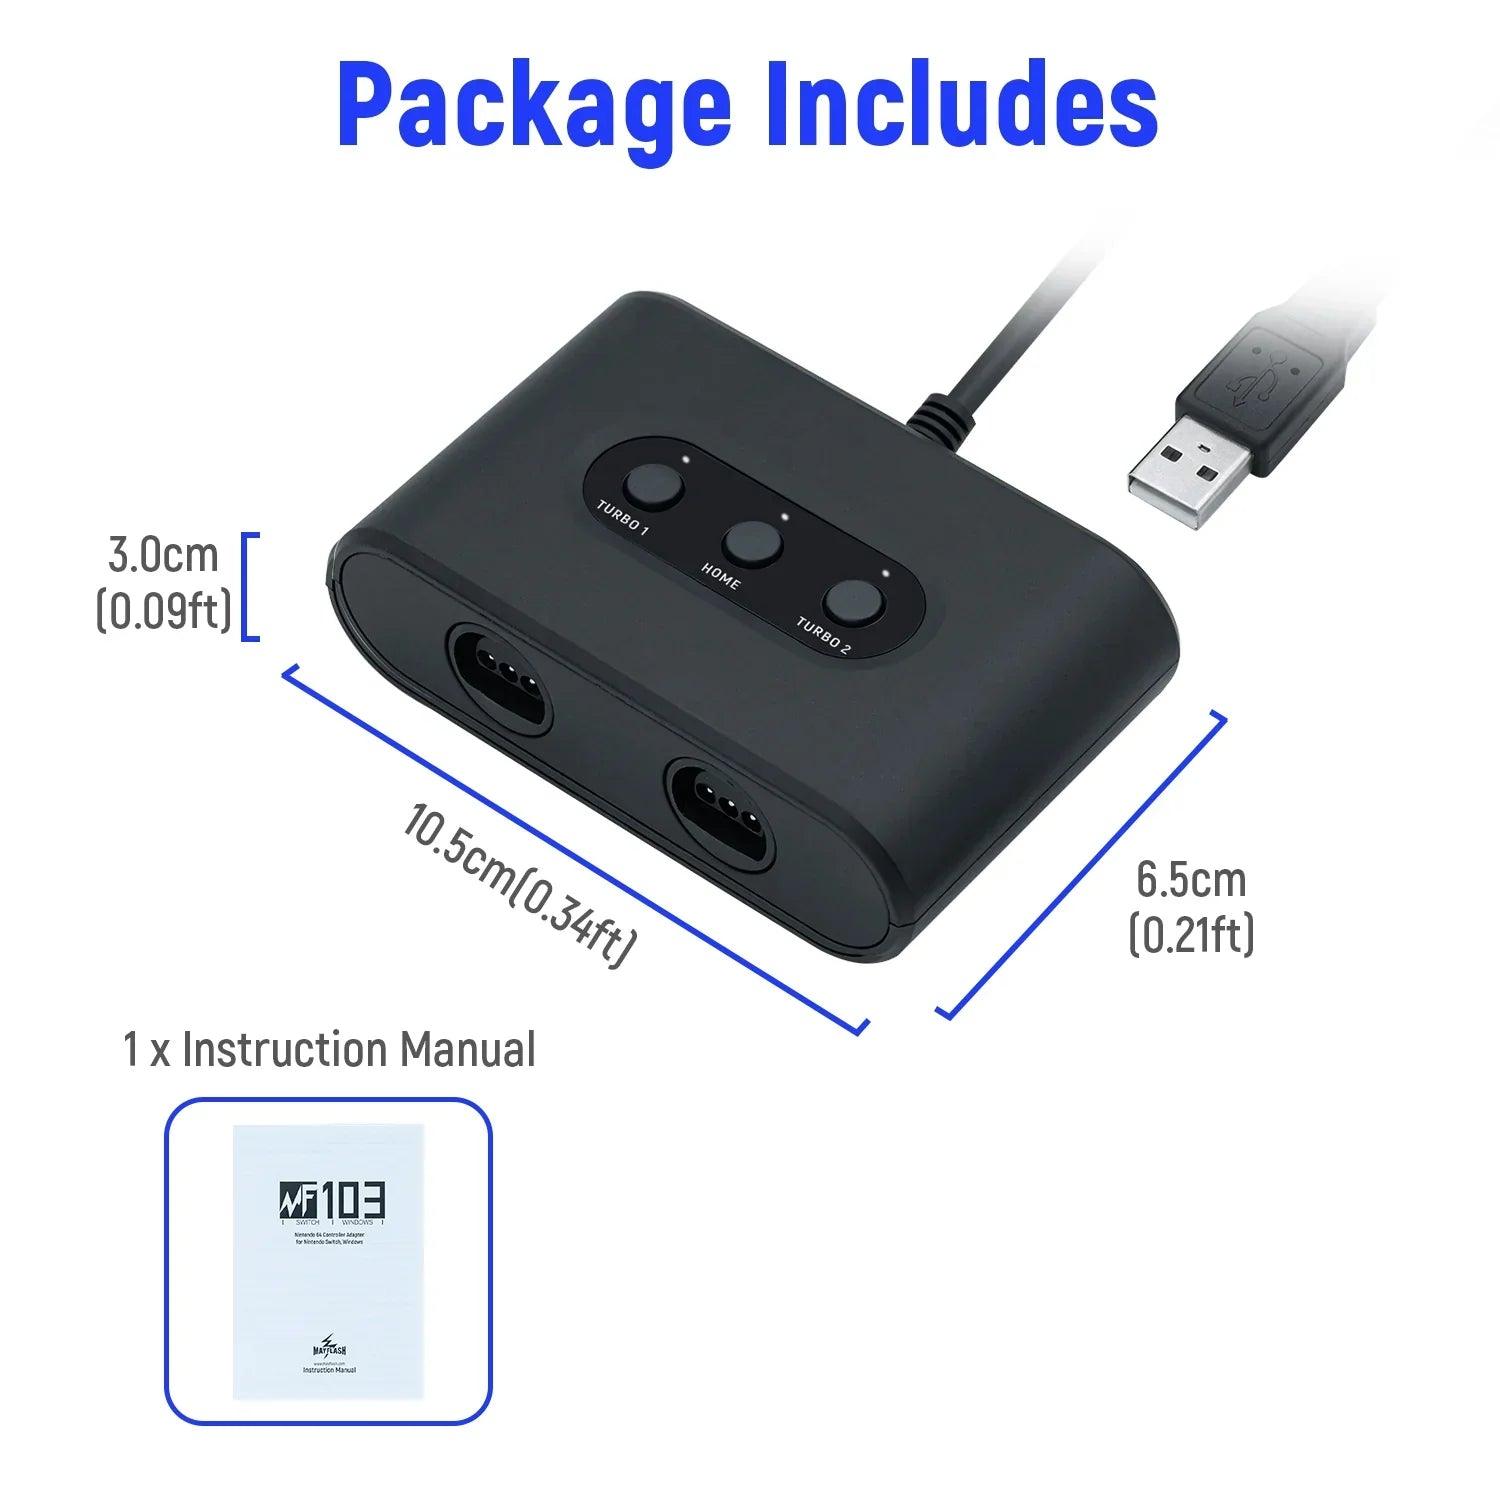 Nintendo 64 (N64) Kontroller Adapter for Nintendo Switch/PC - RetroGaming.no